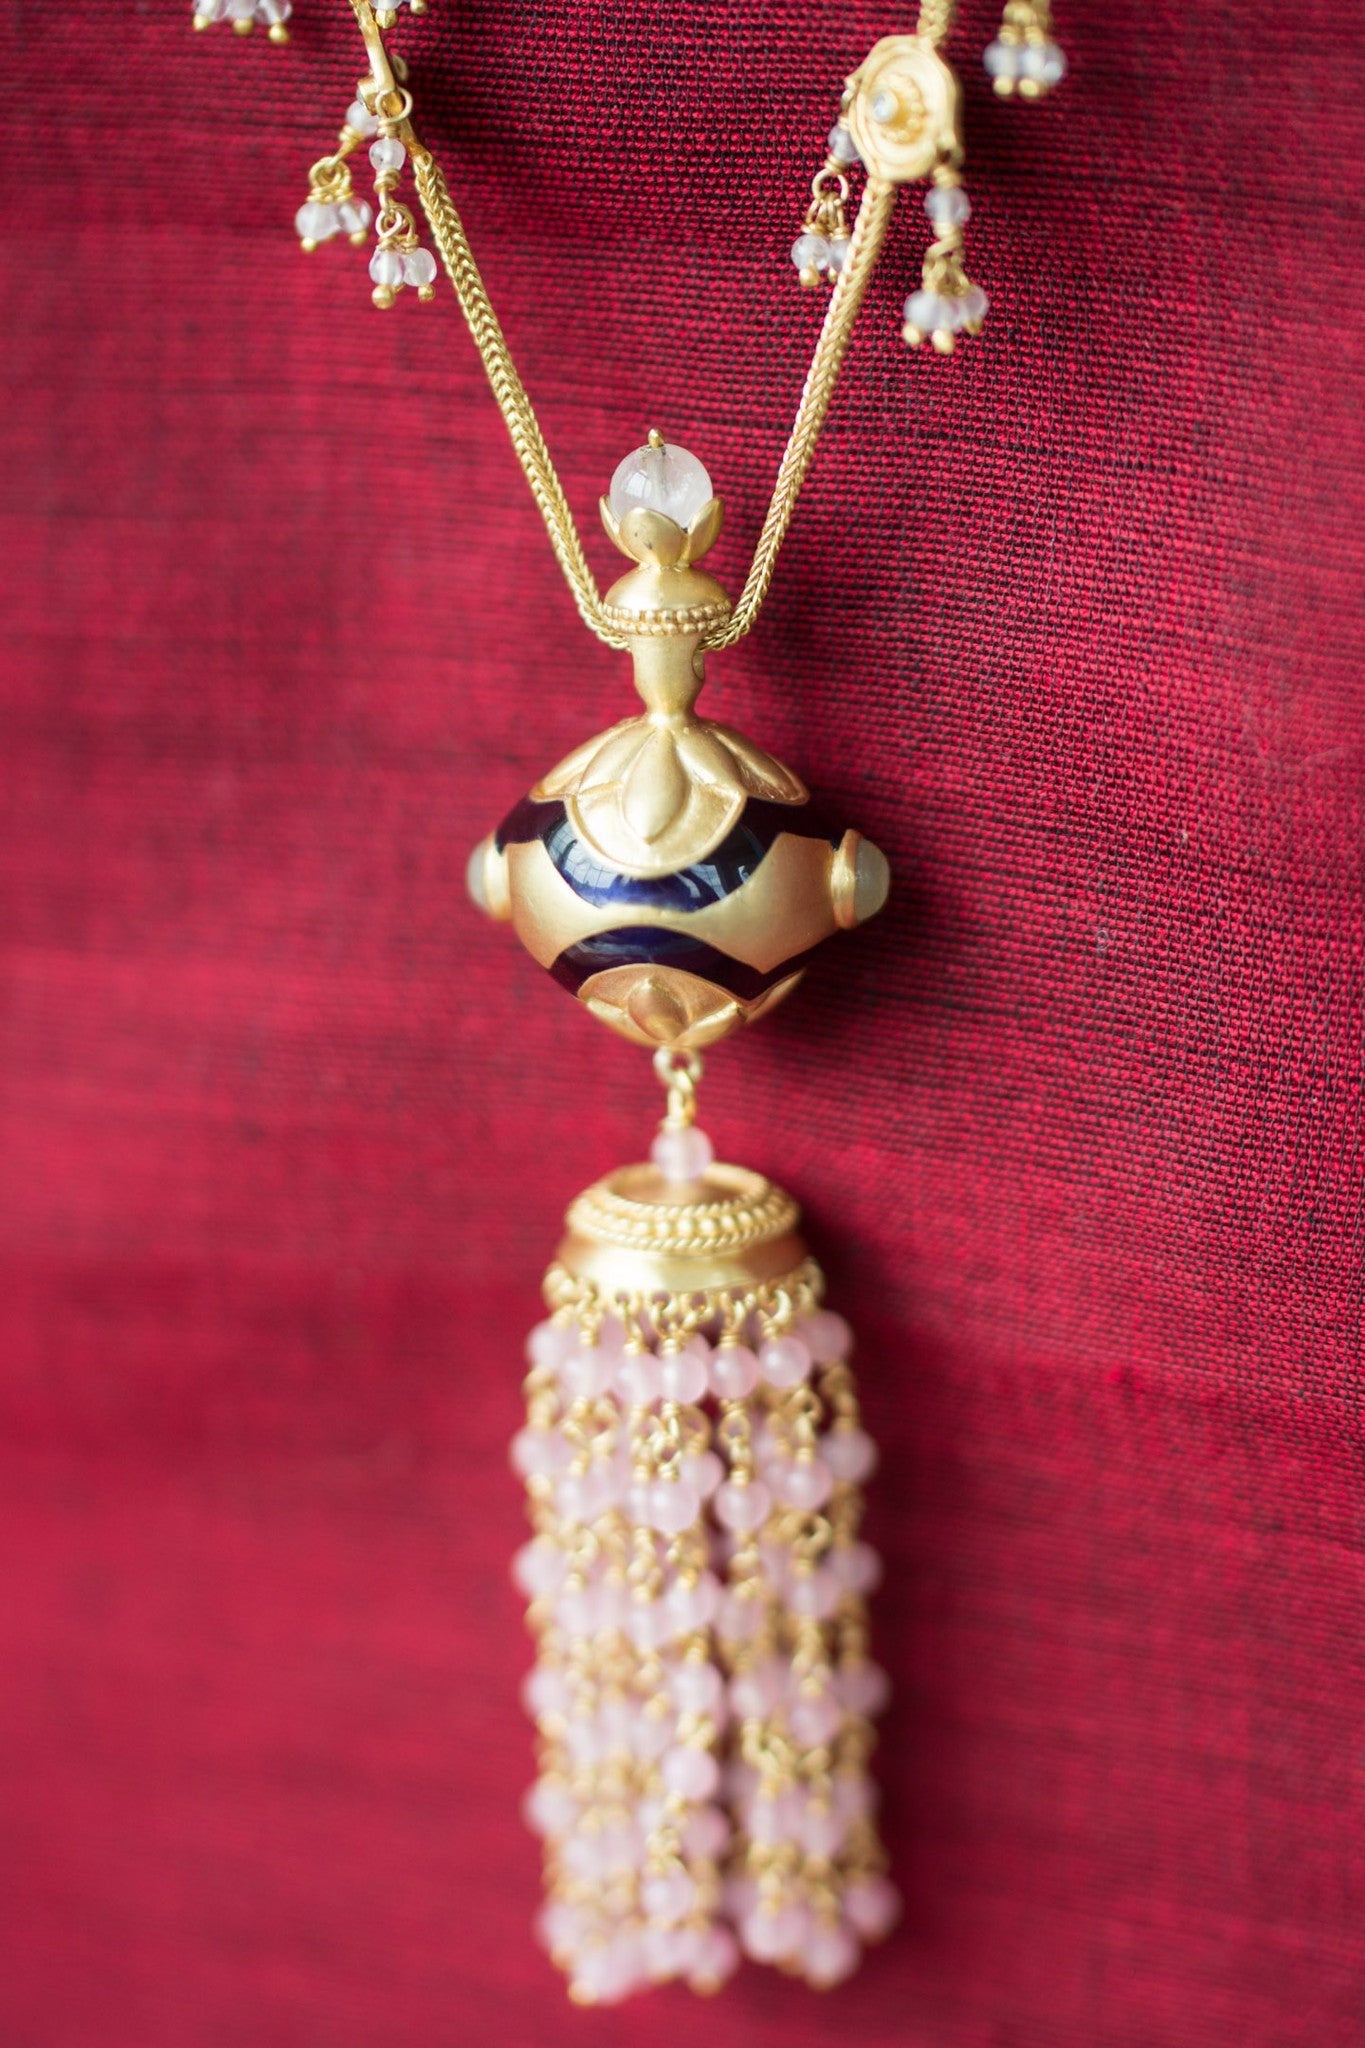 20a428-silver-gold-plated-amrapali-necklace-rose-quartz-tassel-alternate-view